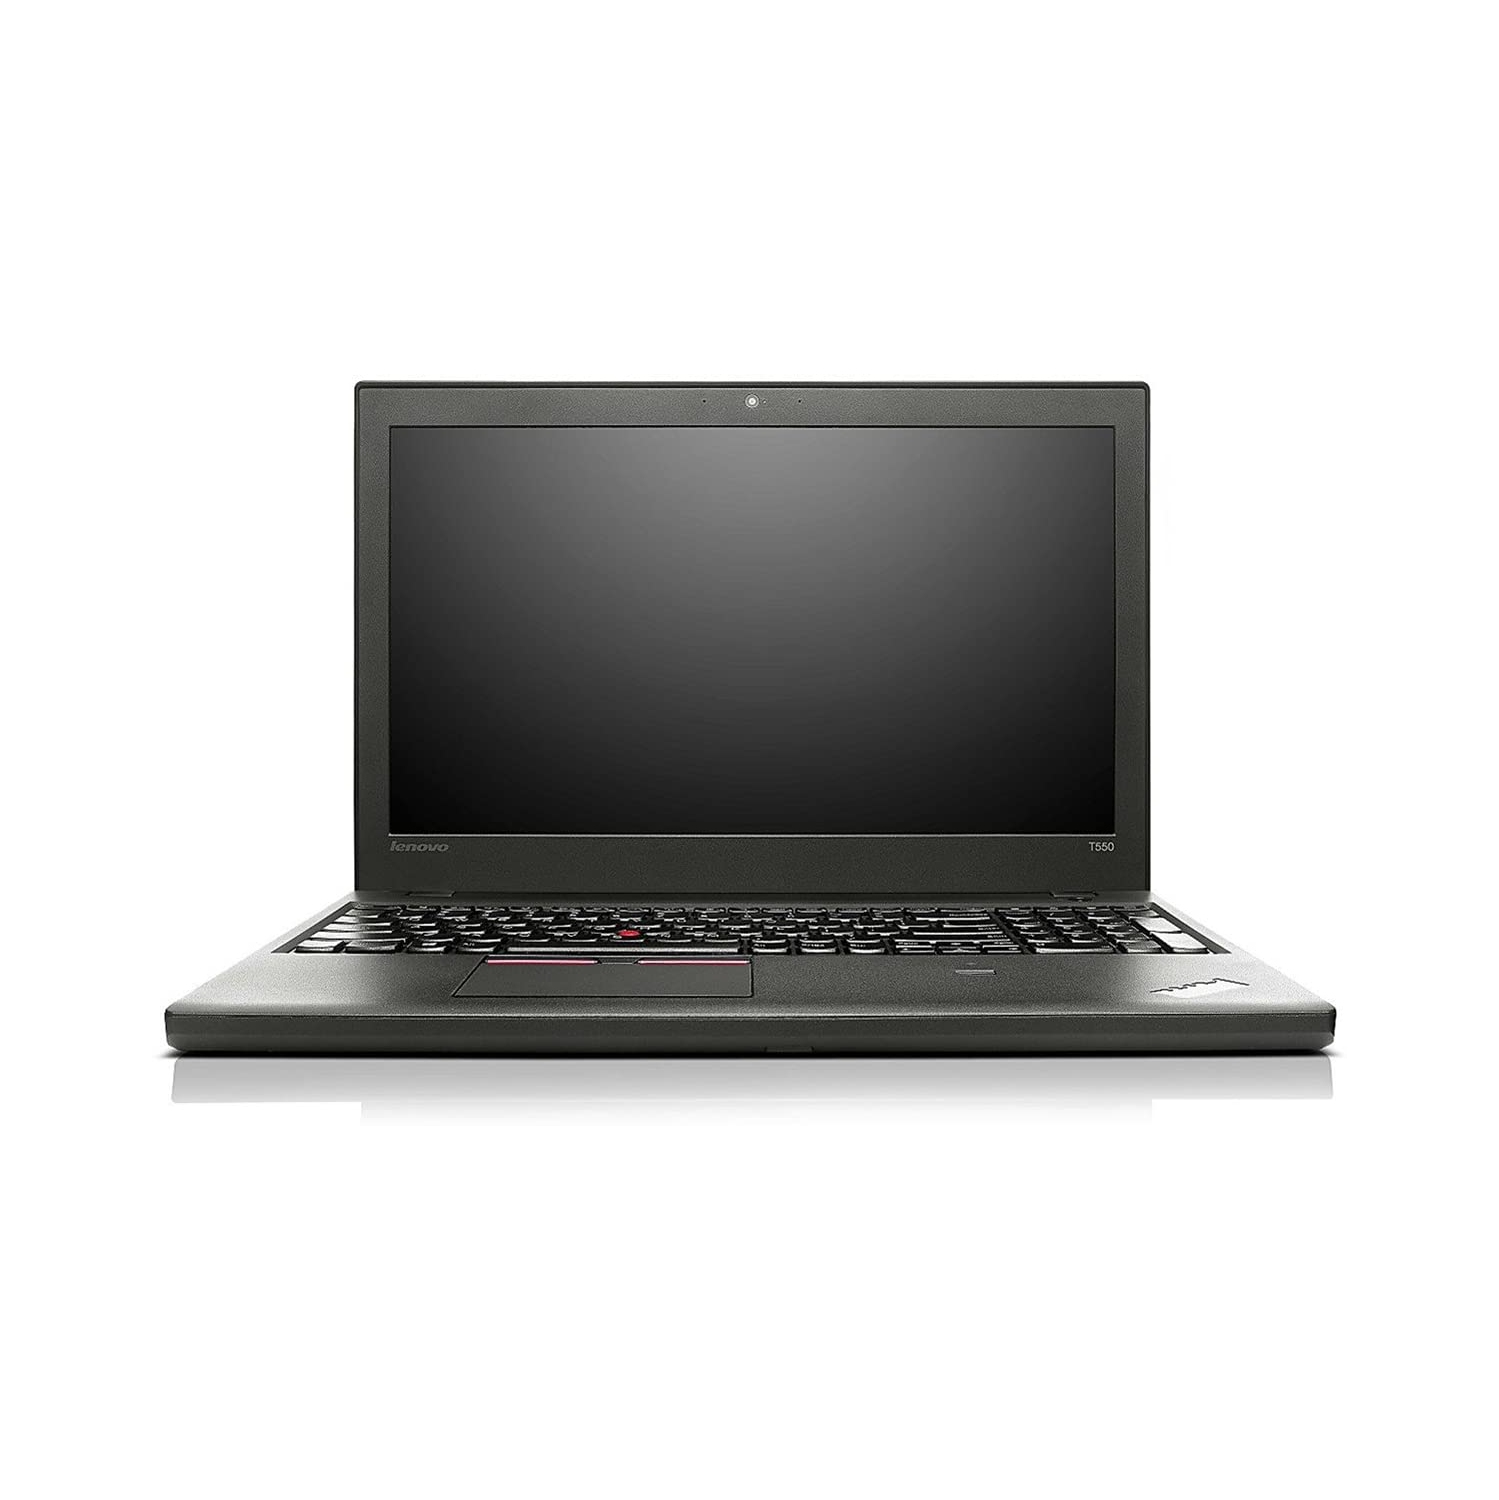 Refurbished (Good) - Lenovo ThinkPad T550 15.6" LED Ultrabook - Intel Core i7-5600U @ 2.60 GHz, 16GB RAM, 500GB SSD, Windows 10 Pro - 1 Year Warranty